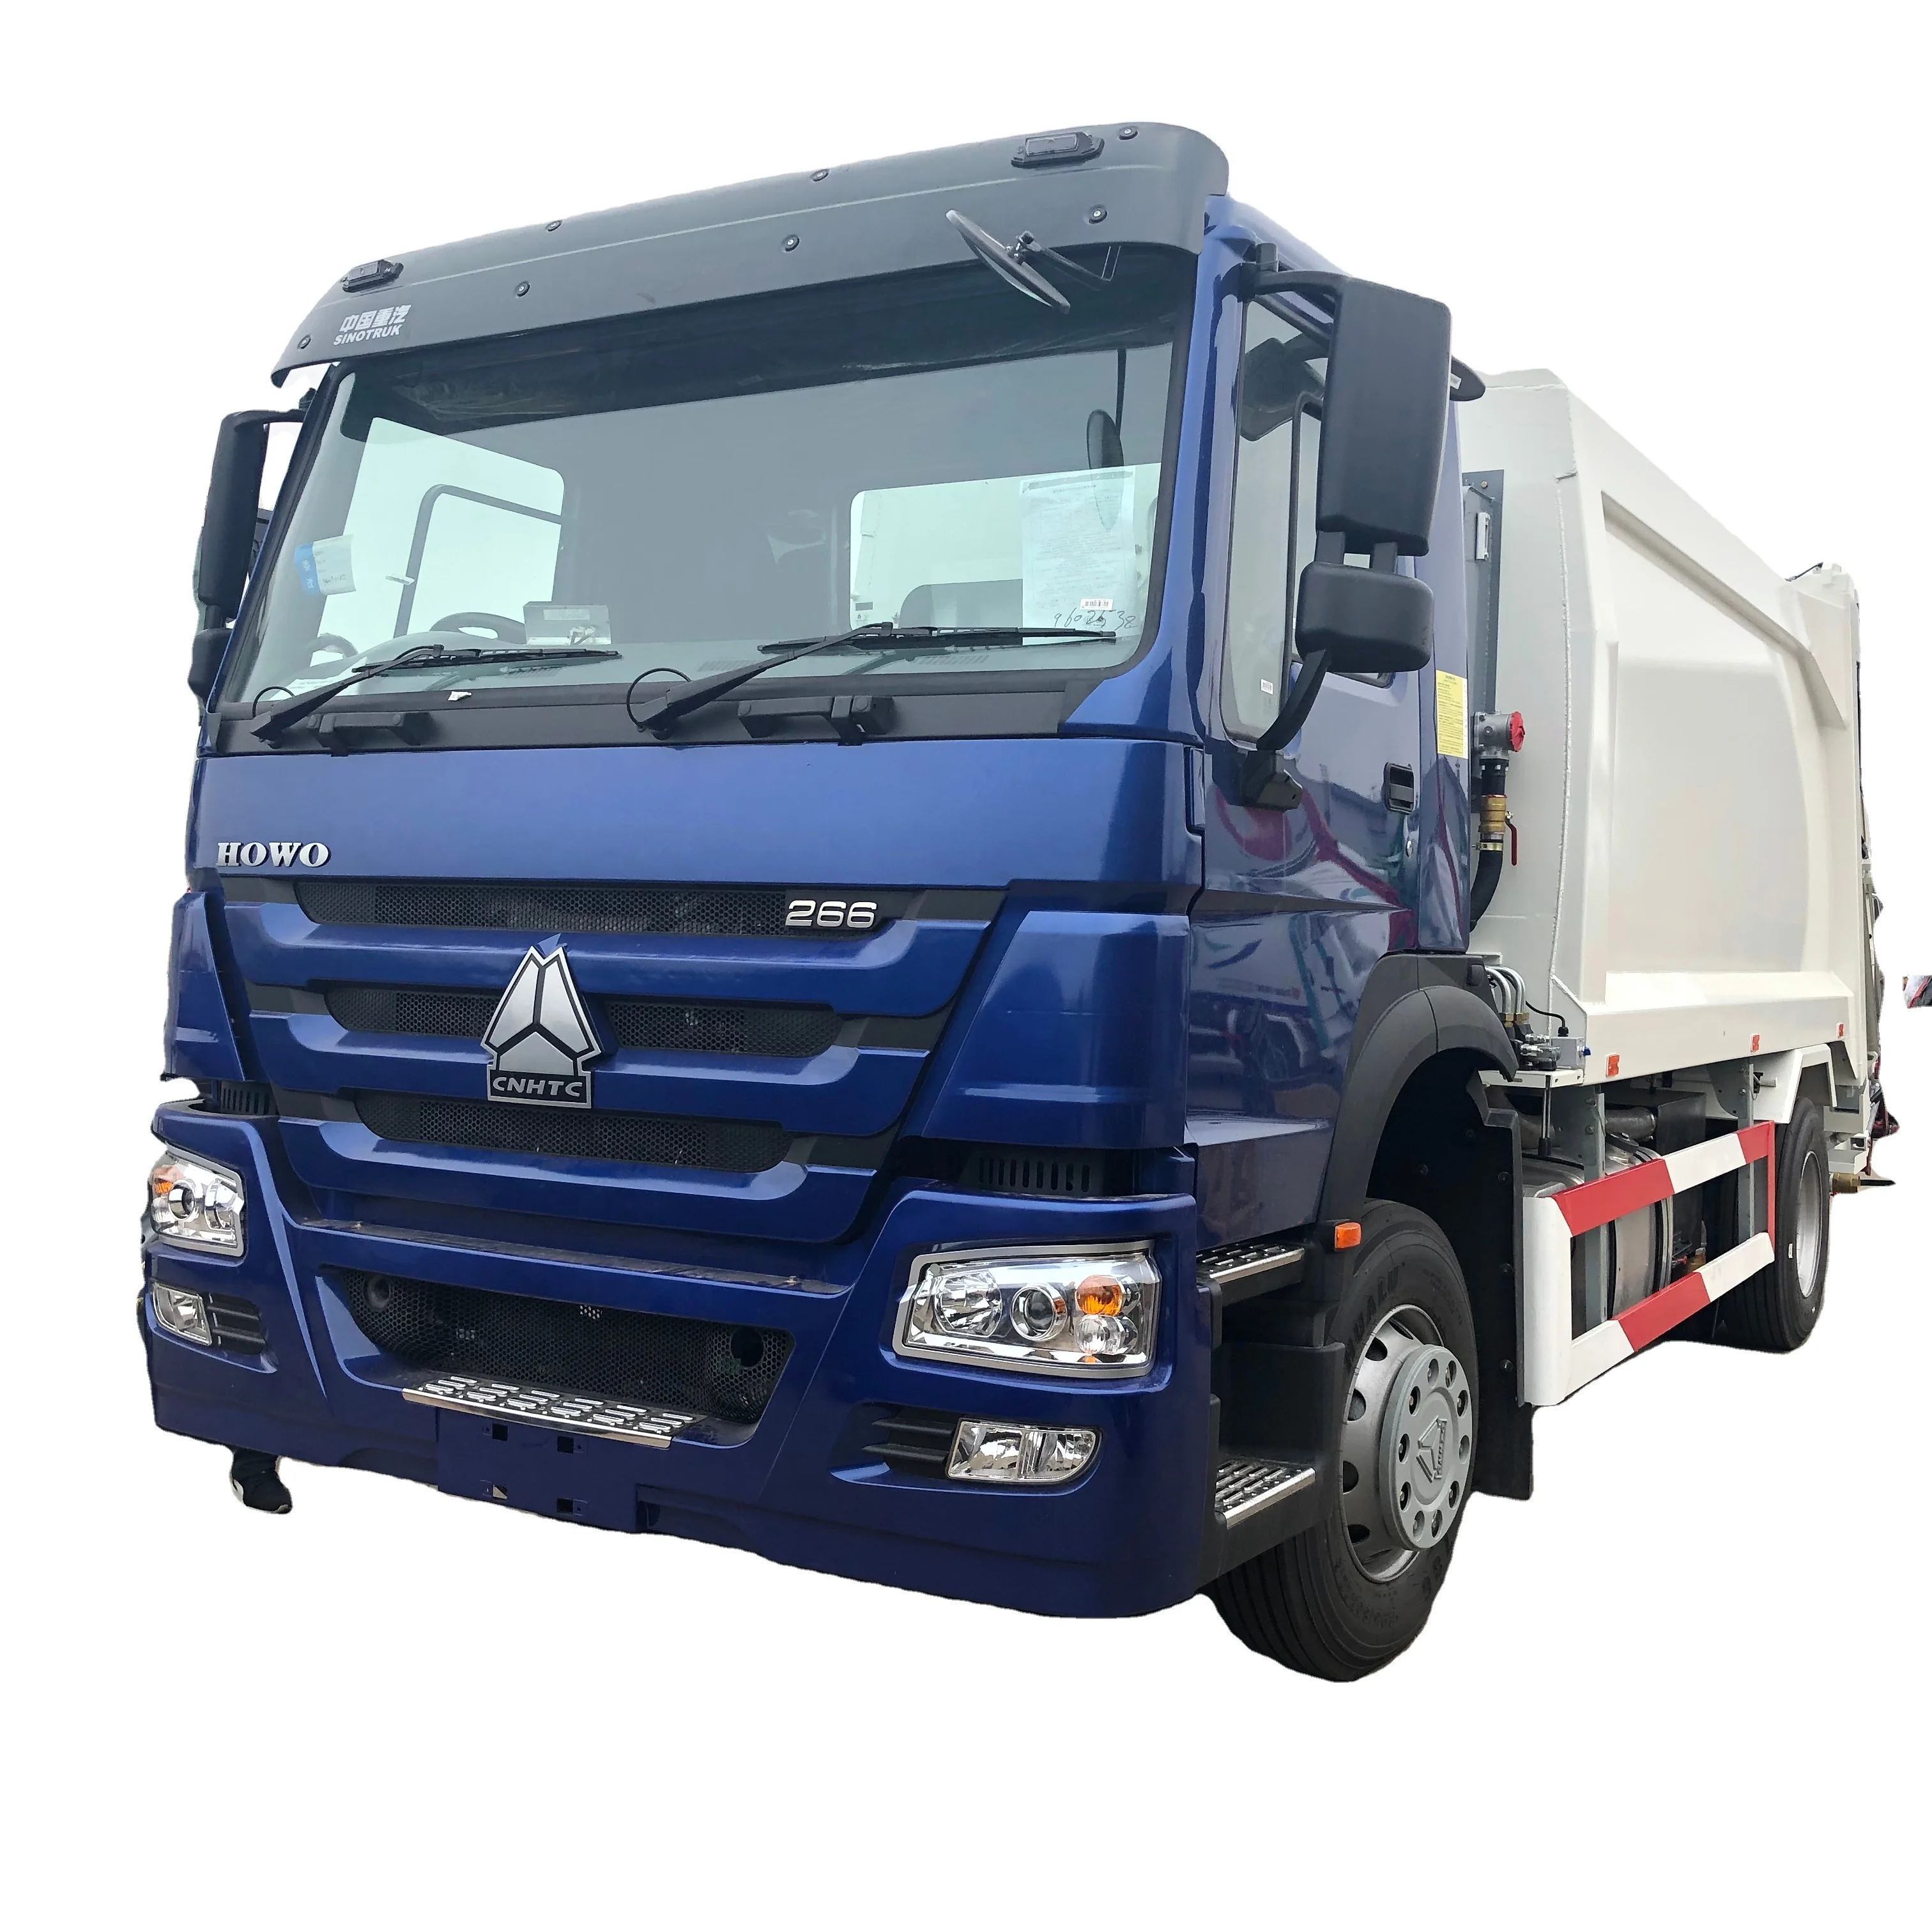 
2020 sinotruk brand new 10 ton compactor garbage truck howo truck price  (62184576497)